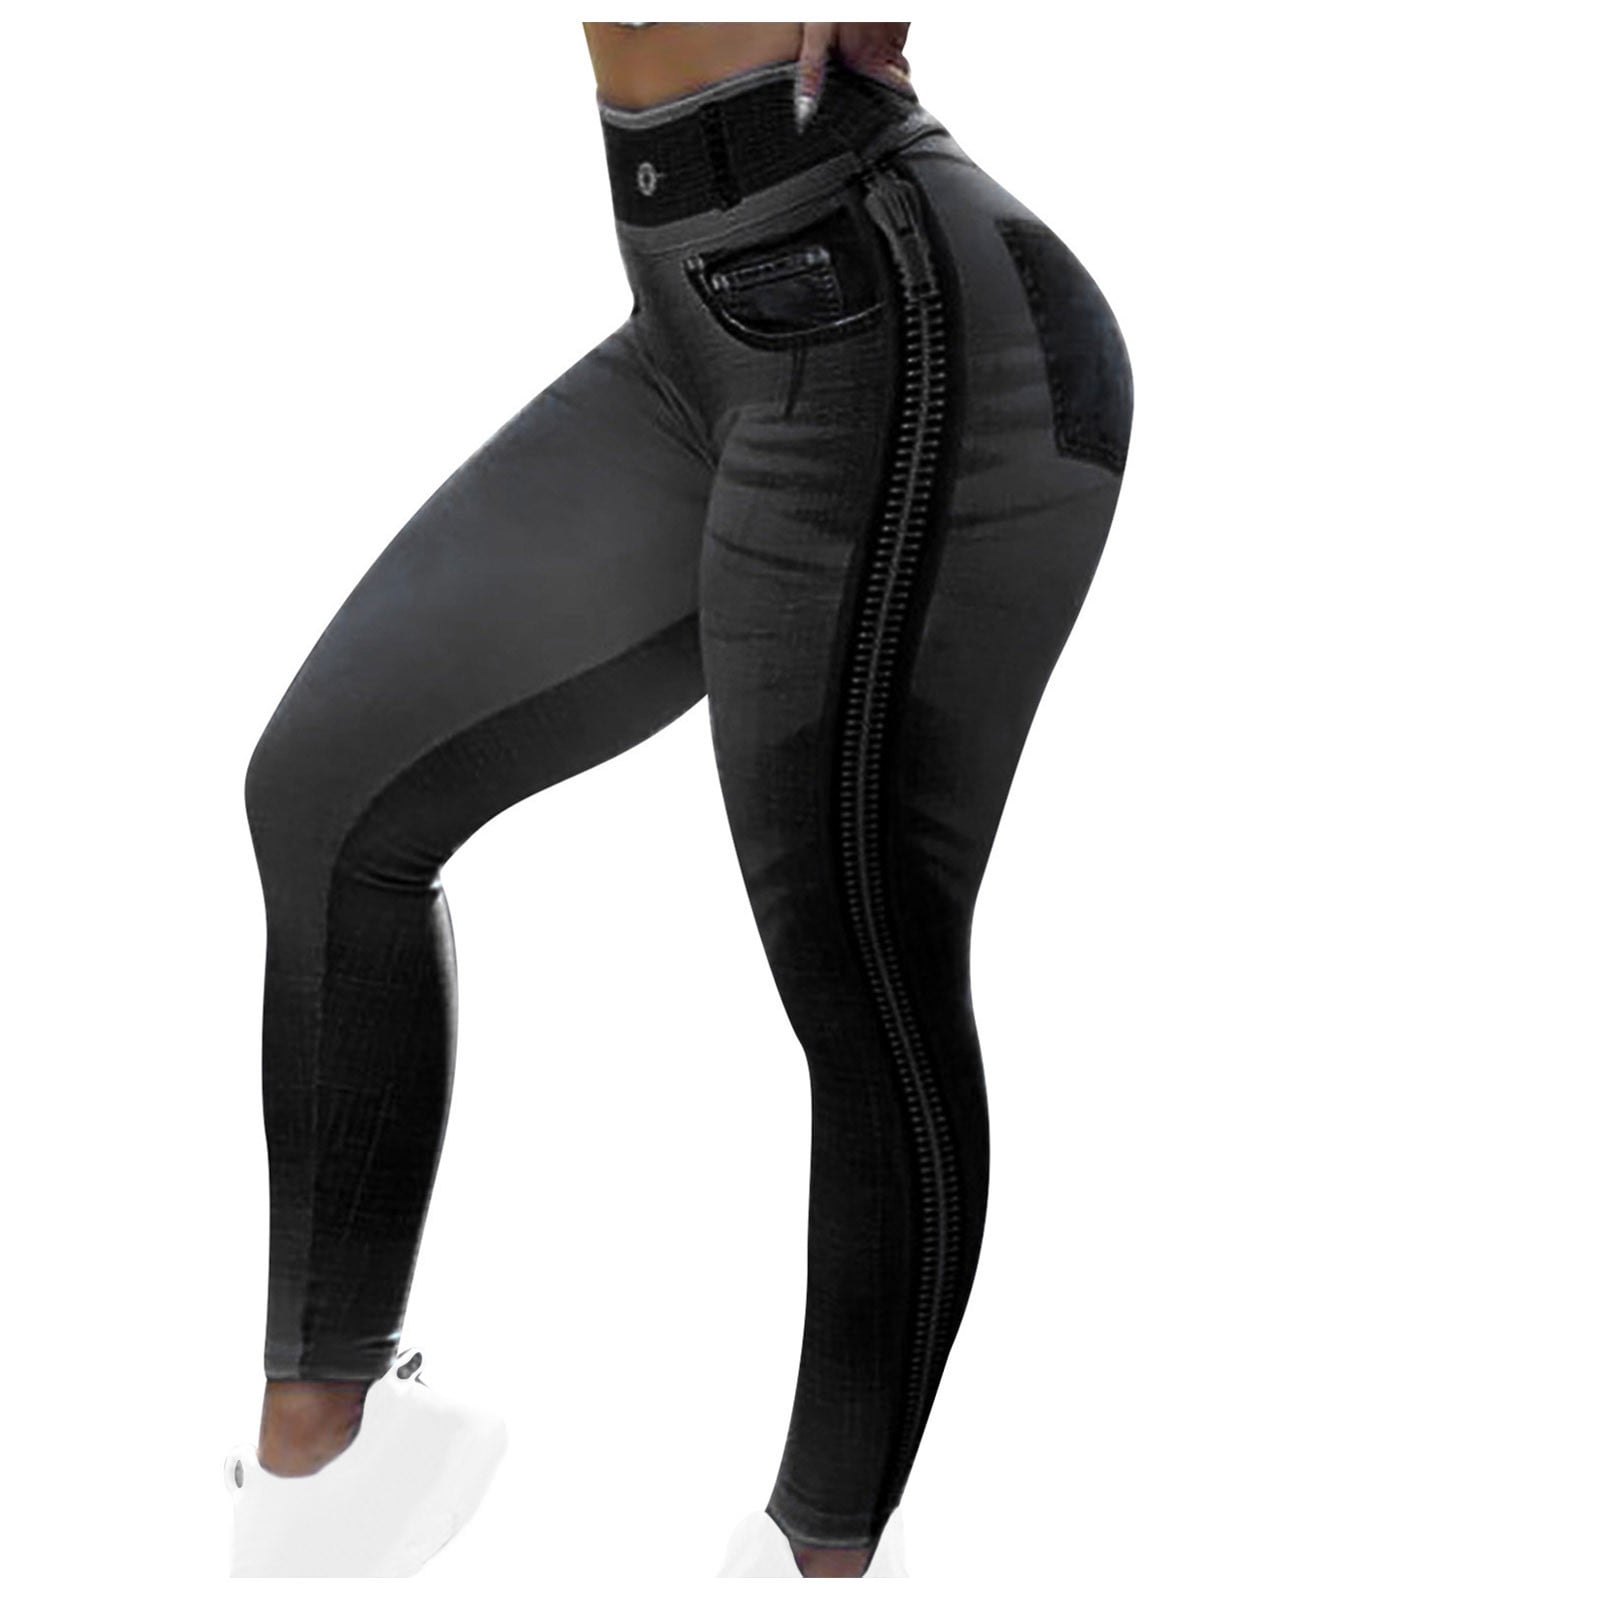 Jean Look Leggings For Women High Waist Tummy Control With Back Pockets,  Denim Printed Fake Jean Leggings, Seamless